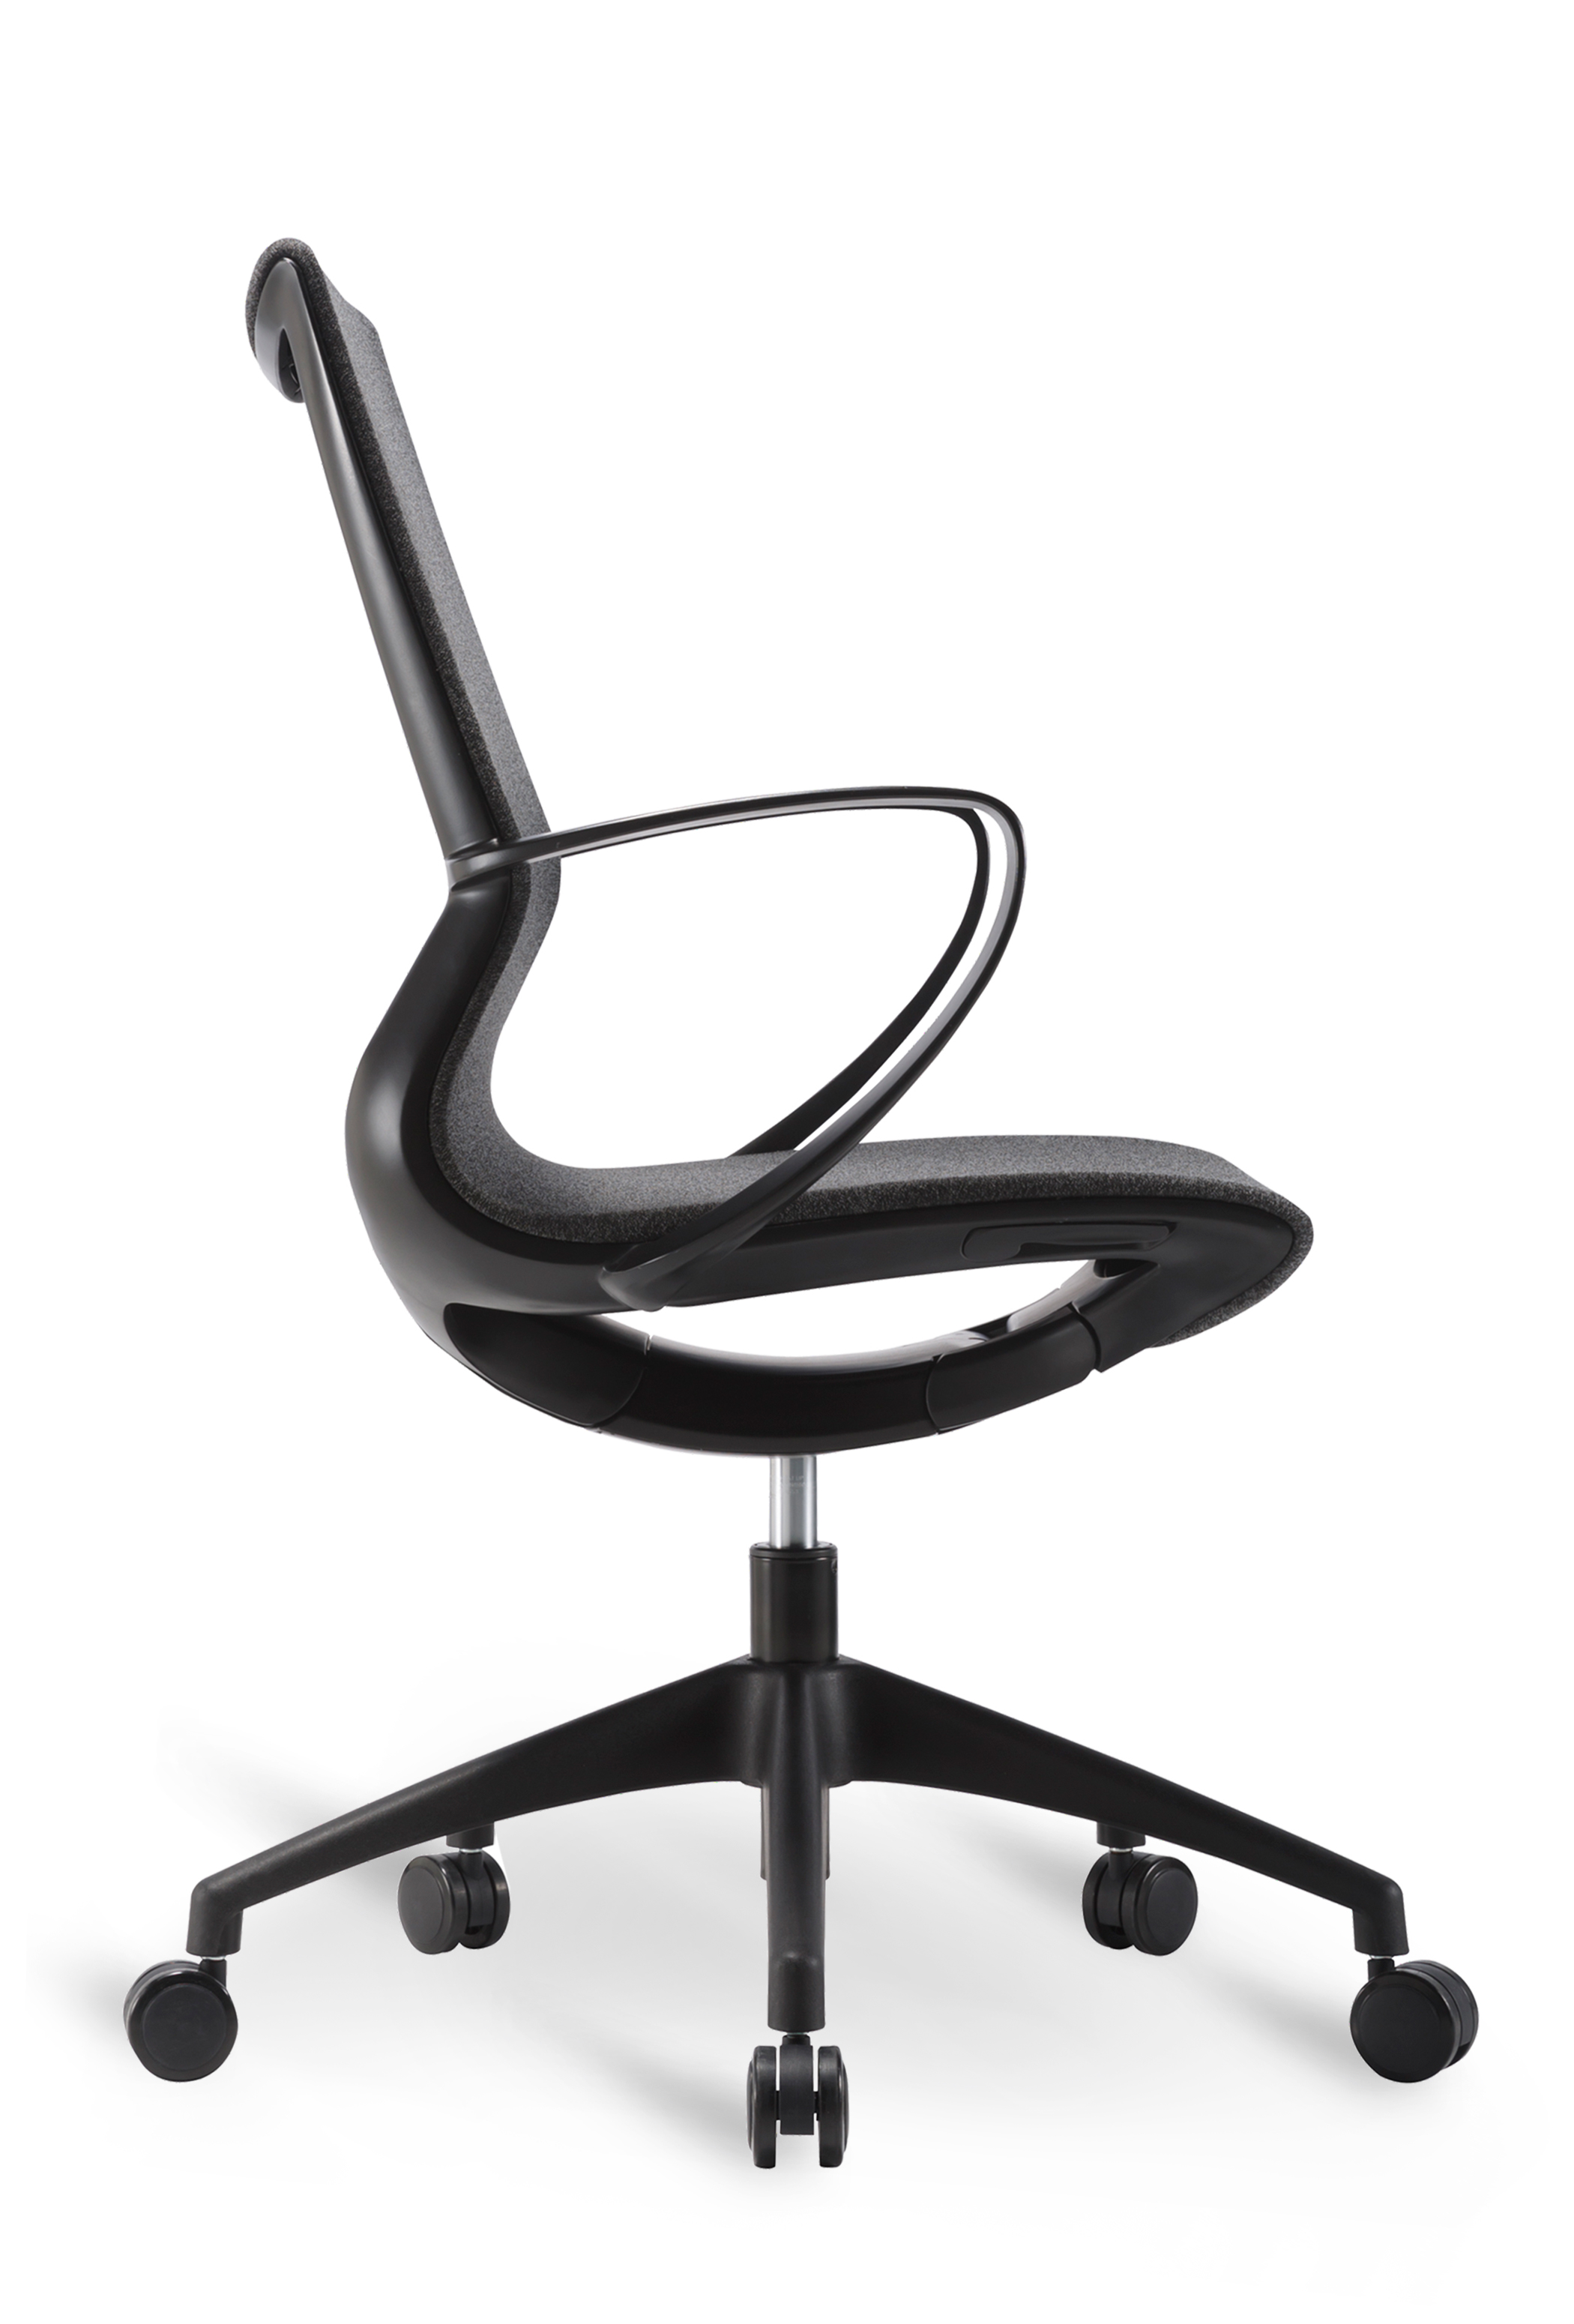 WS - L19 multipurpose chair - Black (Side)